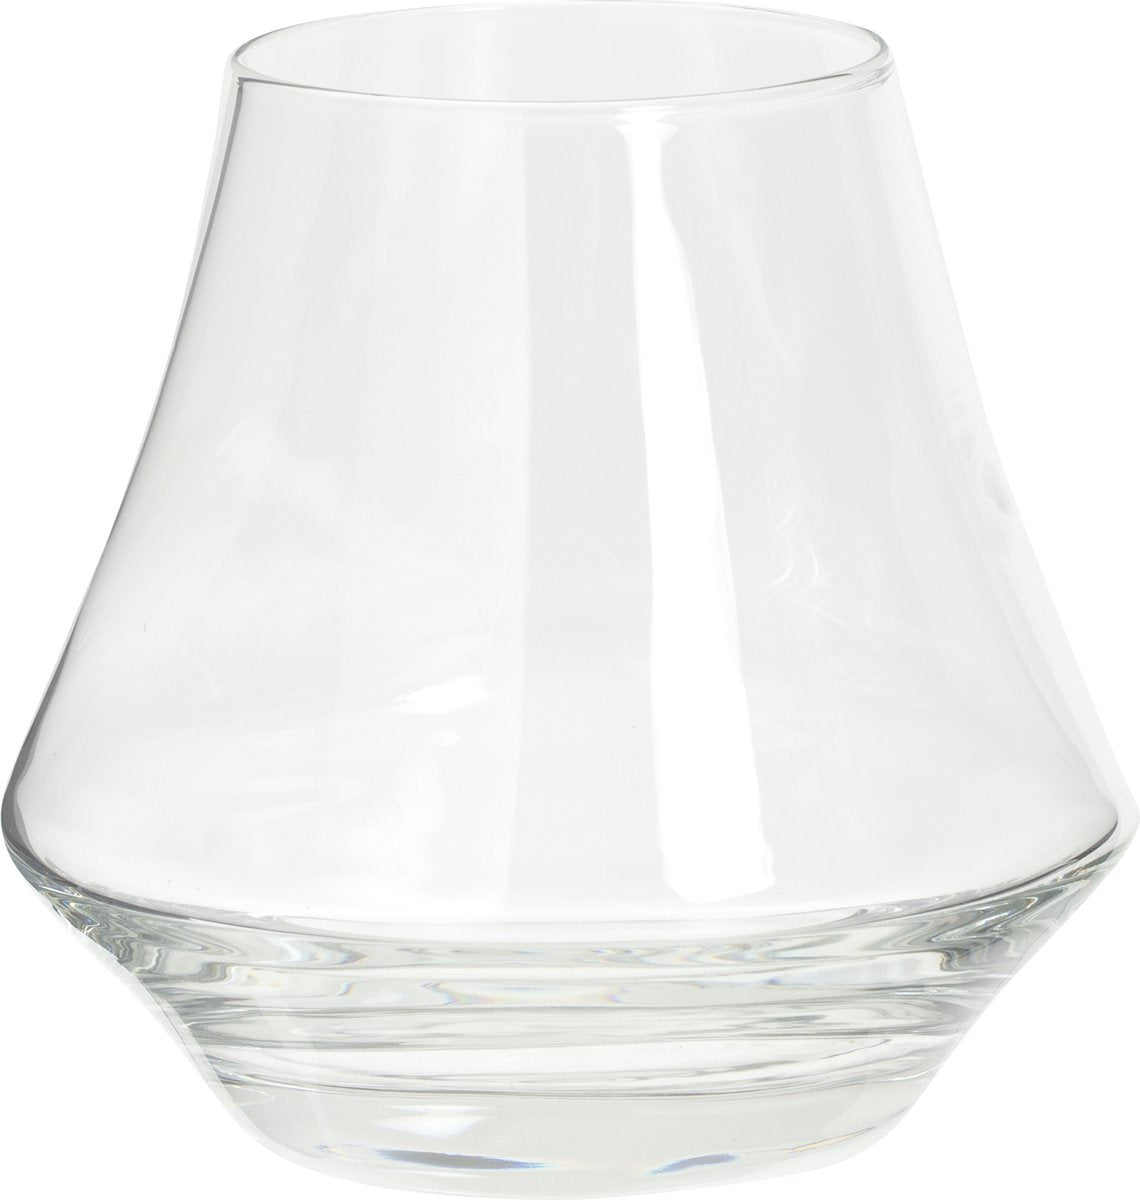 Whiskey glas set van 4 - 29CL - Aroma - Drinkglazen